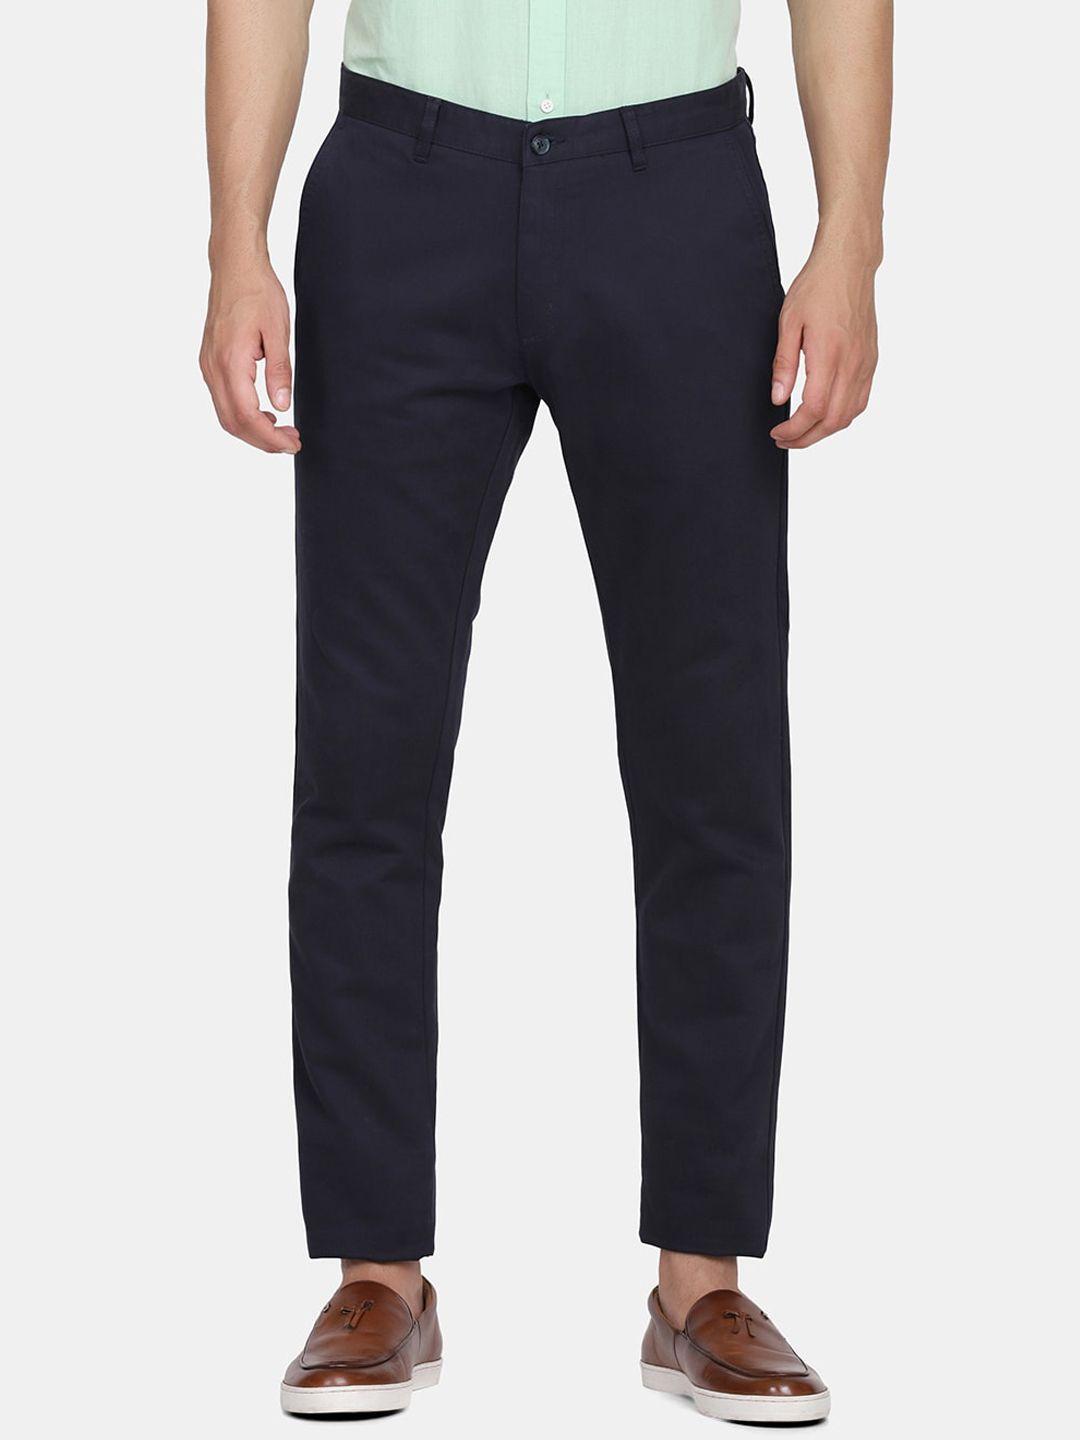 blackberrys men navy blue b-91 skinny fit cotton chinos trousers